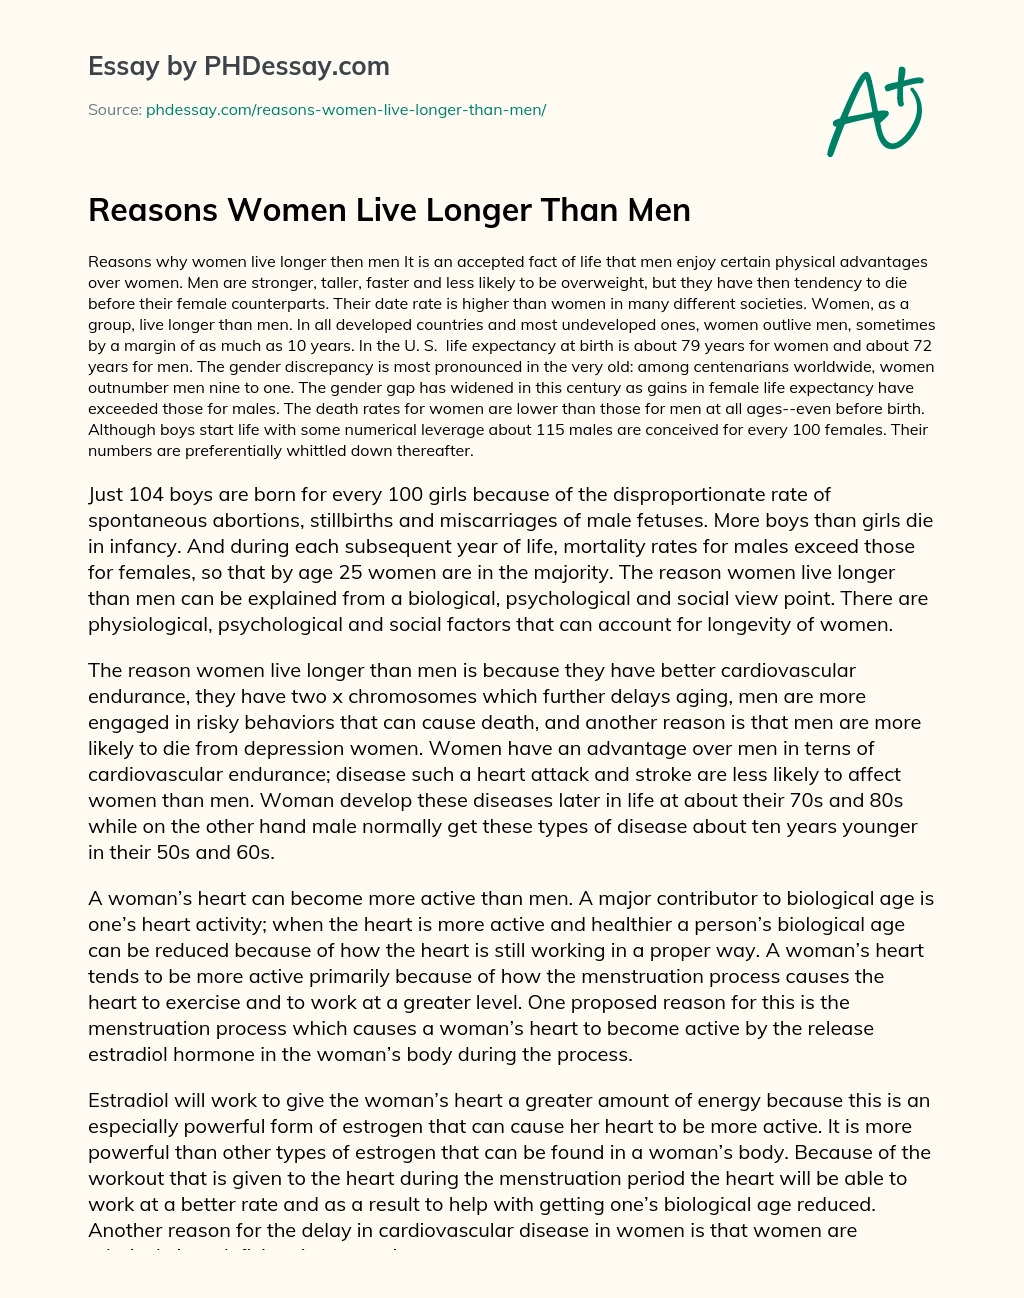 Reasons Women Live Longer Than Men essay